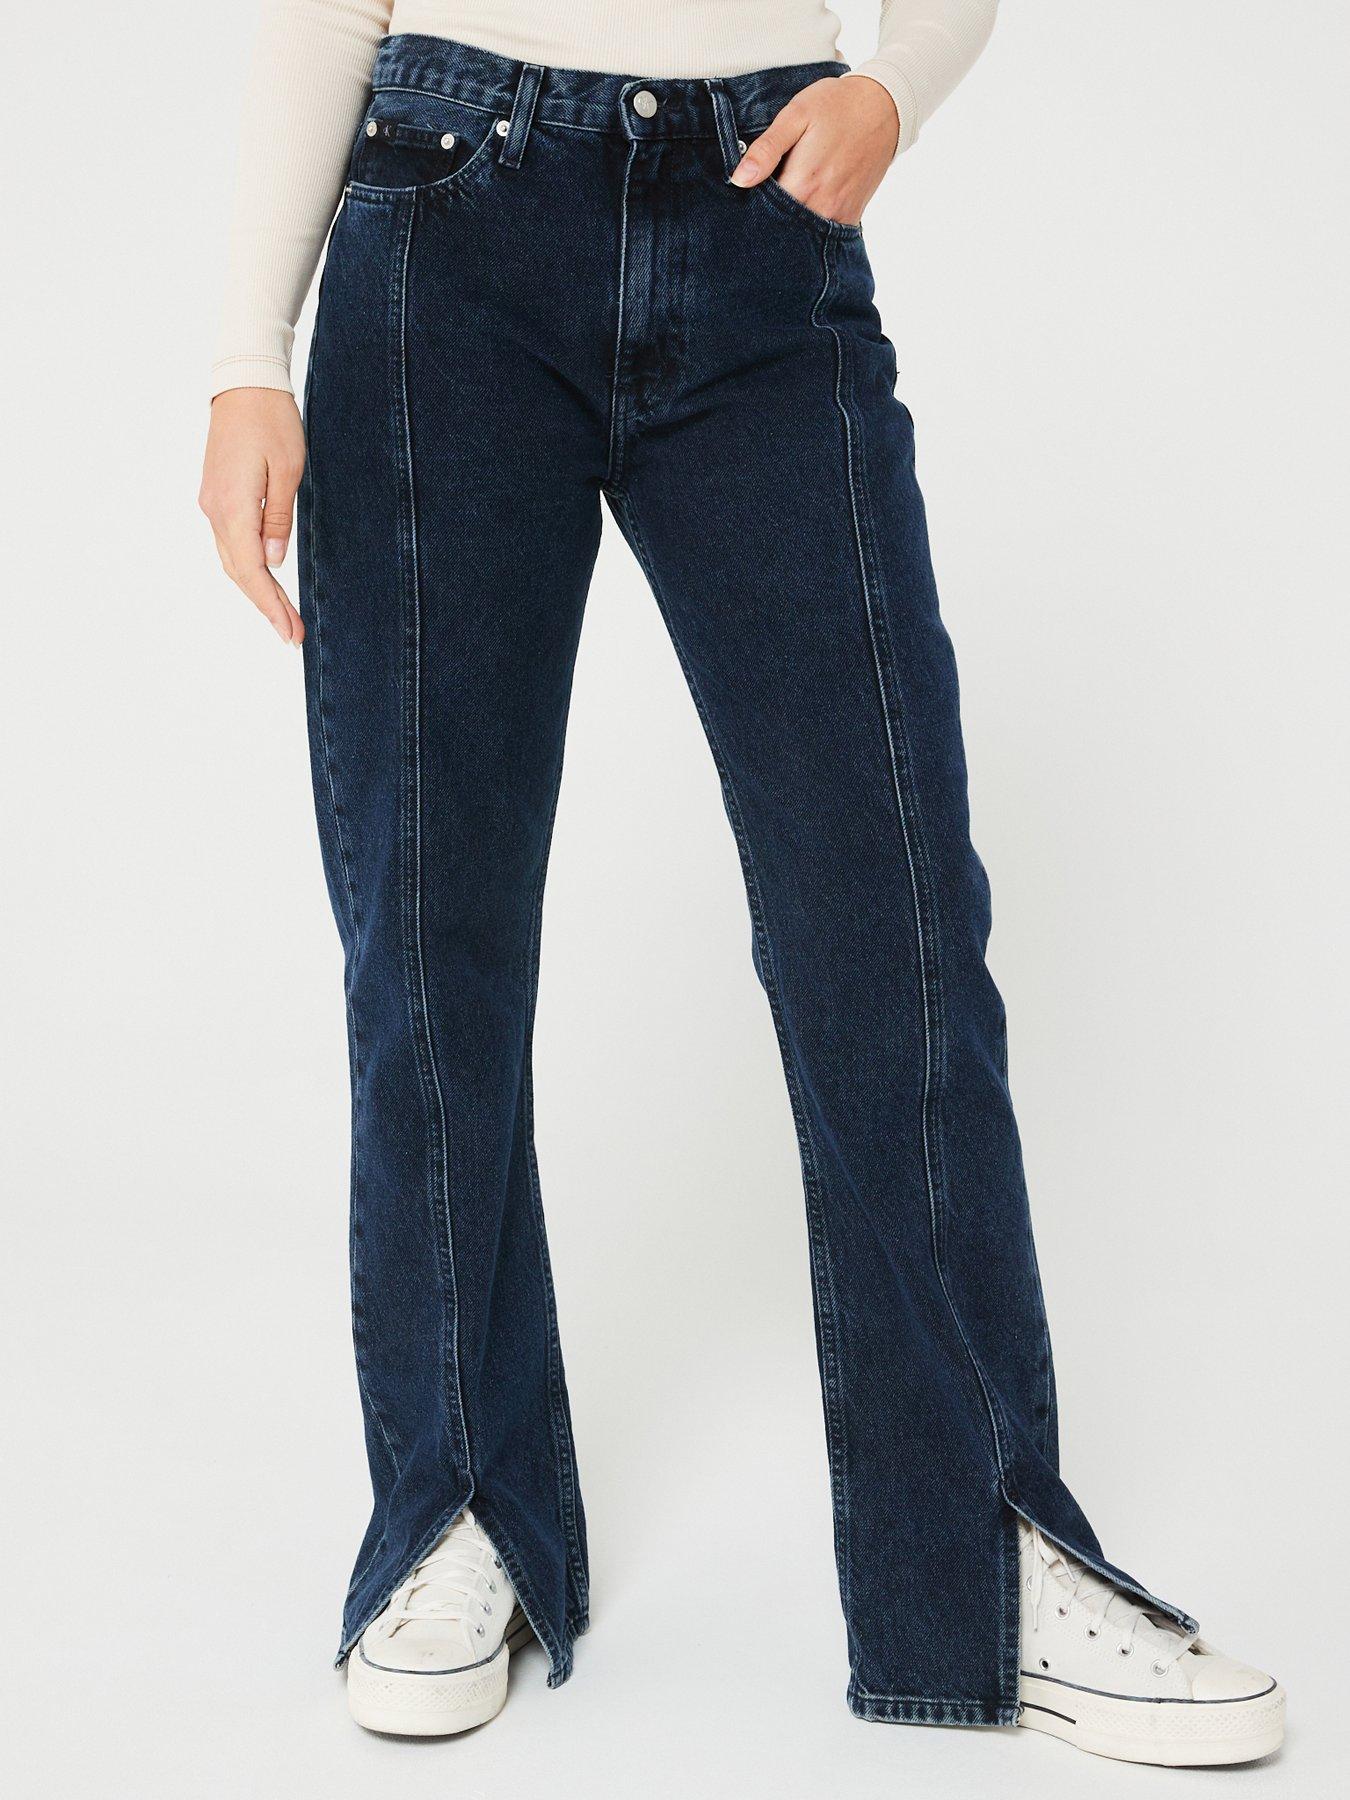 Women's Low Rise Bootcut Denim Jeans Stretch Pants Black UK 4 6 8 10 12 14  